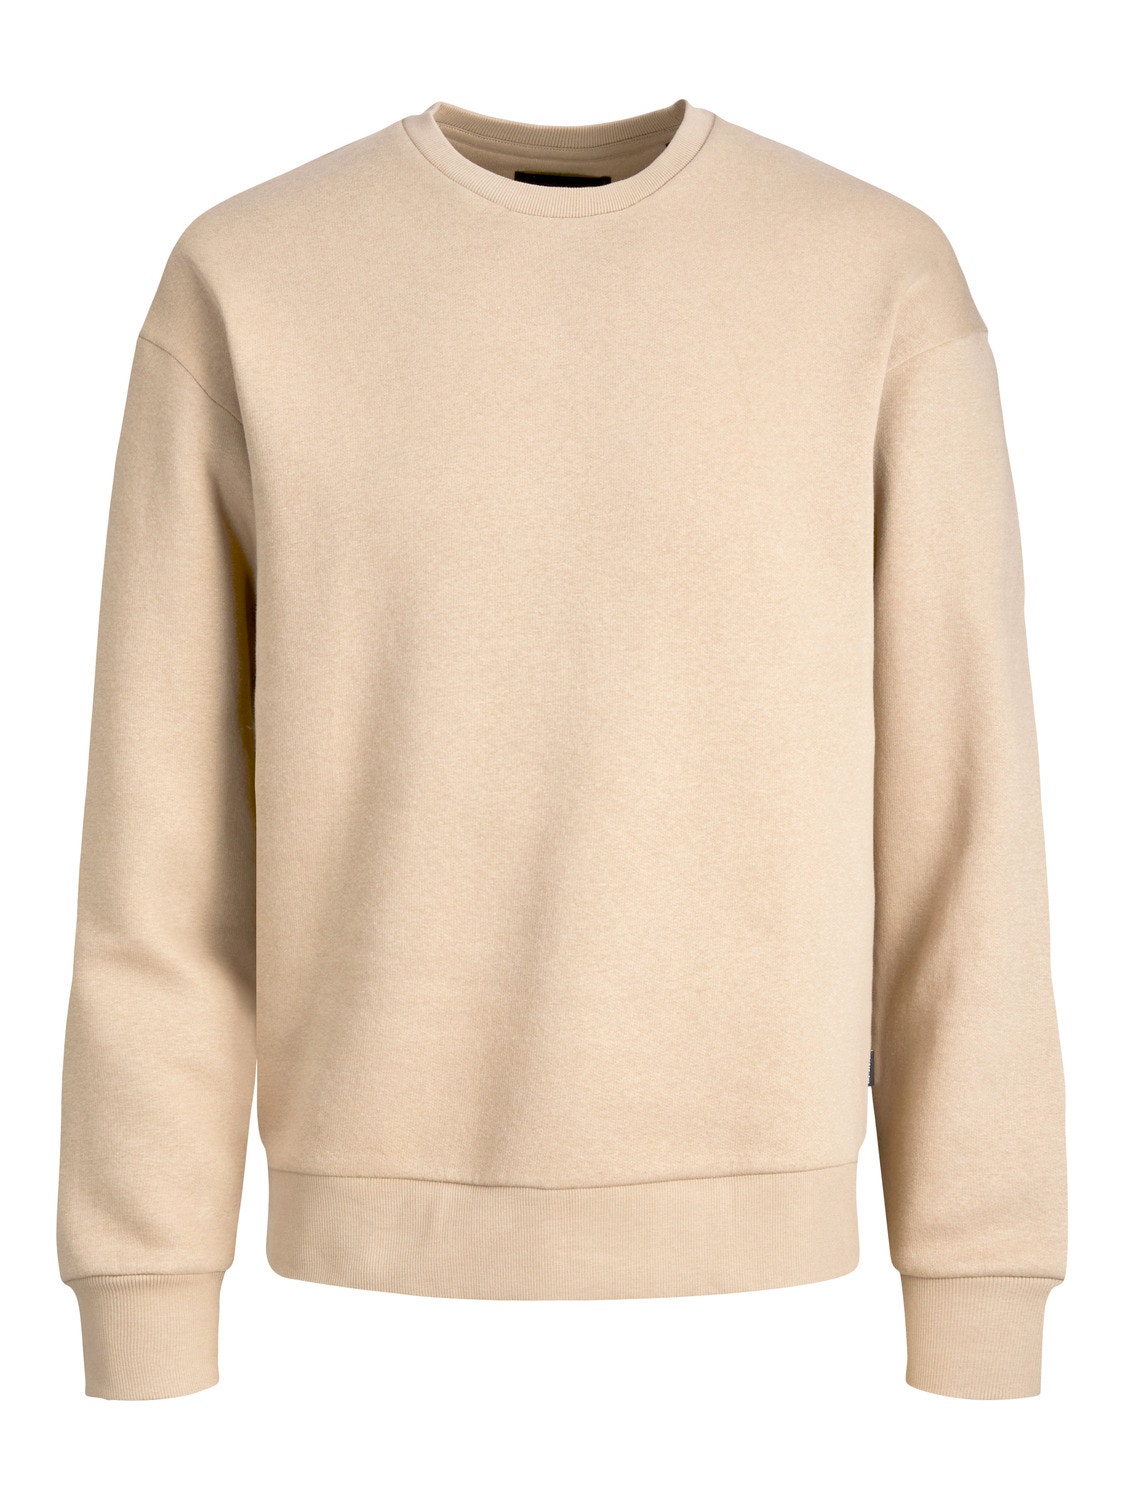 Jack & Jones Plain Sweatshirt -Crockery - 12208182